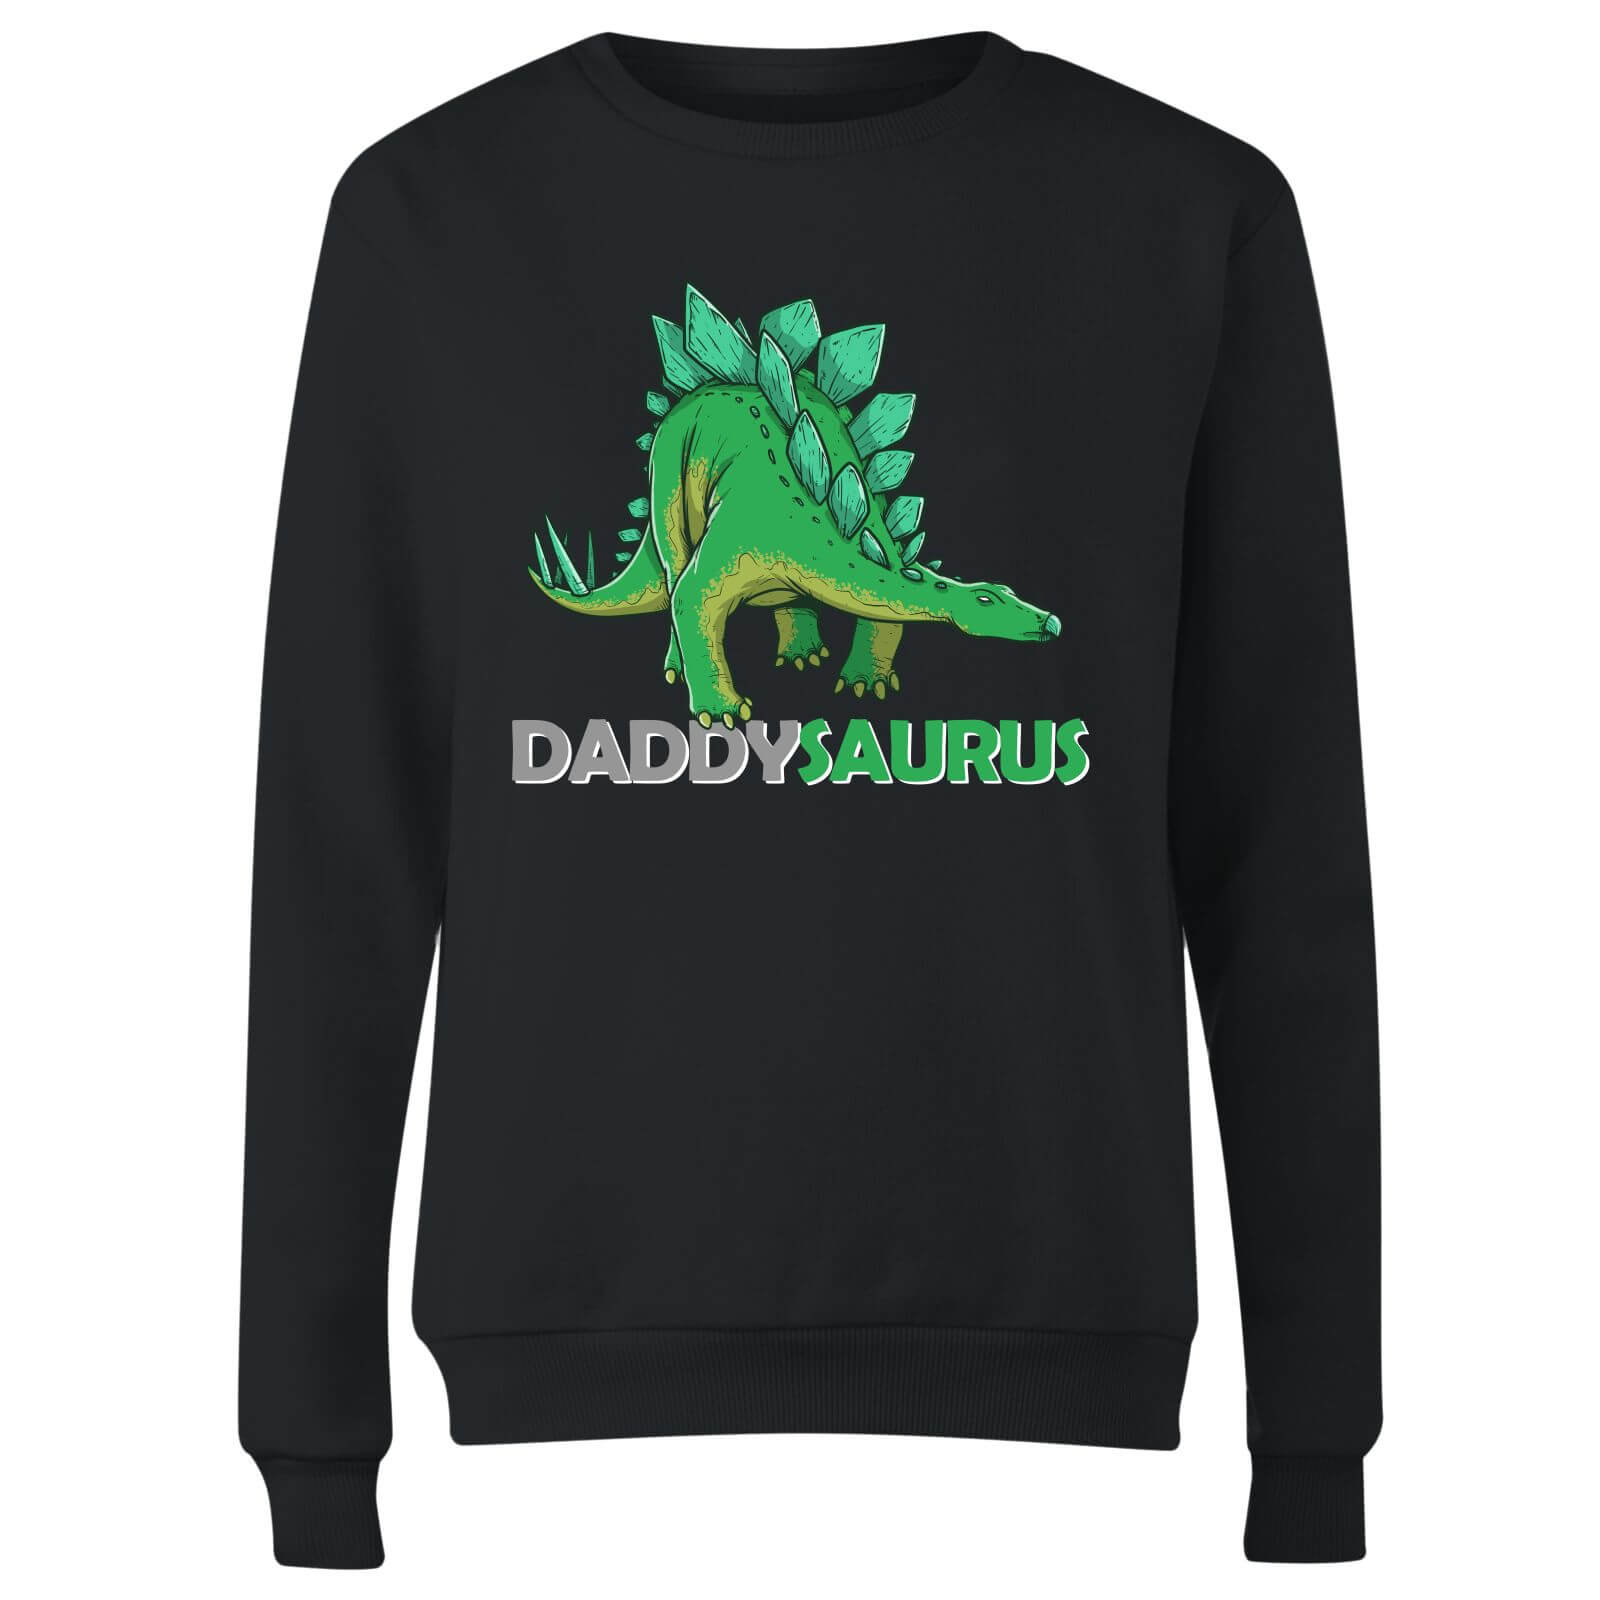 Daddysaurus Women's Sweatshirt - Black - 5XL - Black